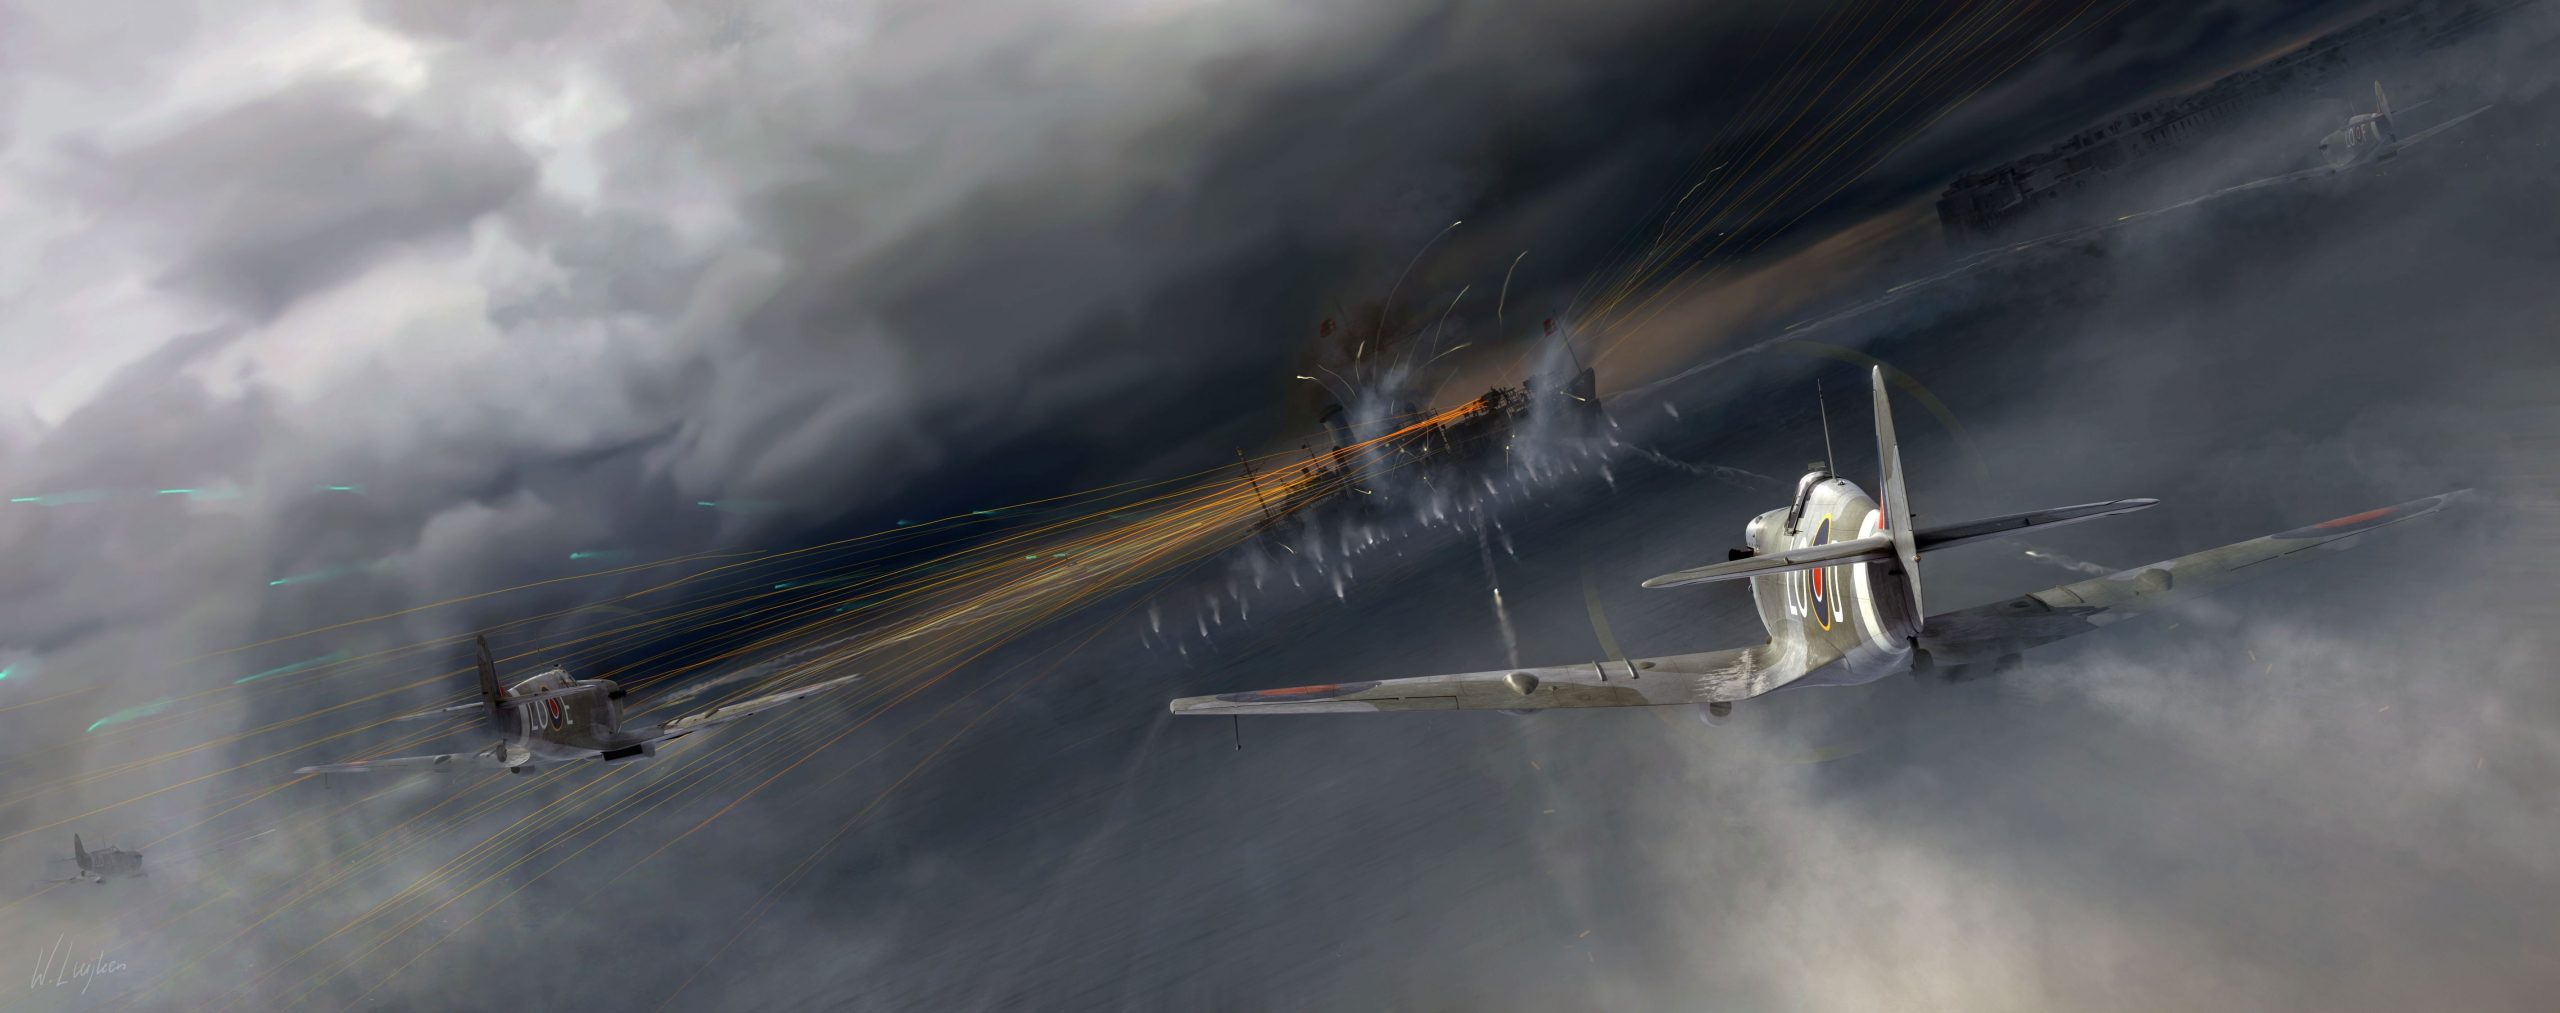 Fighter Plane And Cloudy Sky Wallpaper, World War